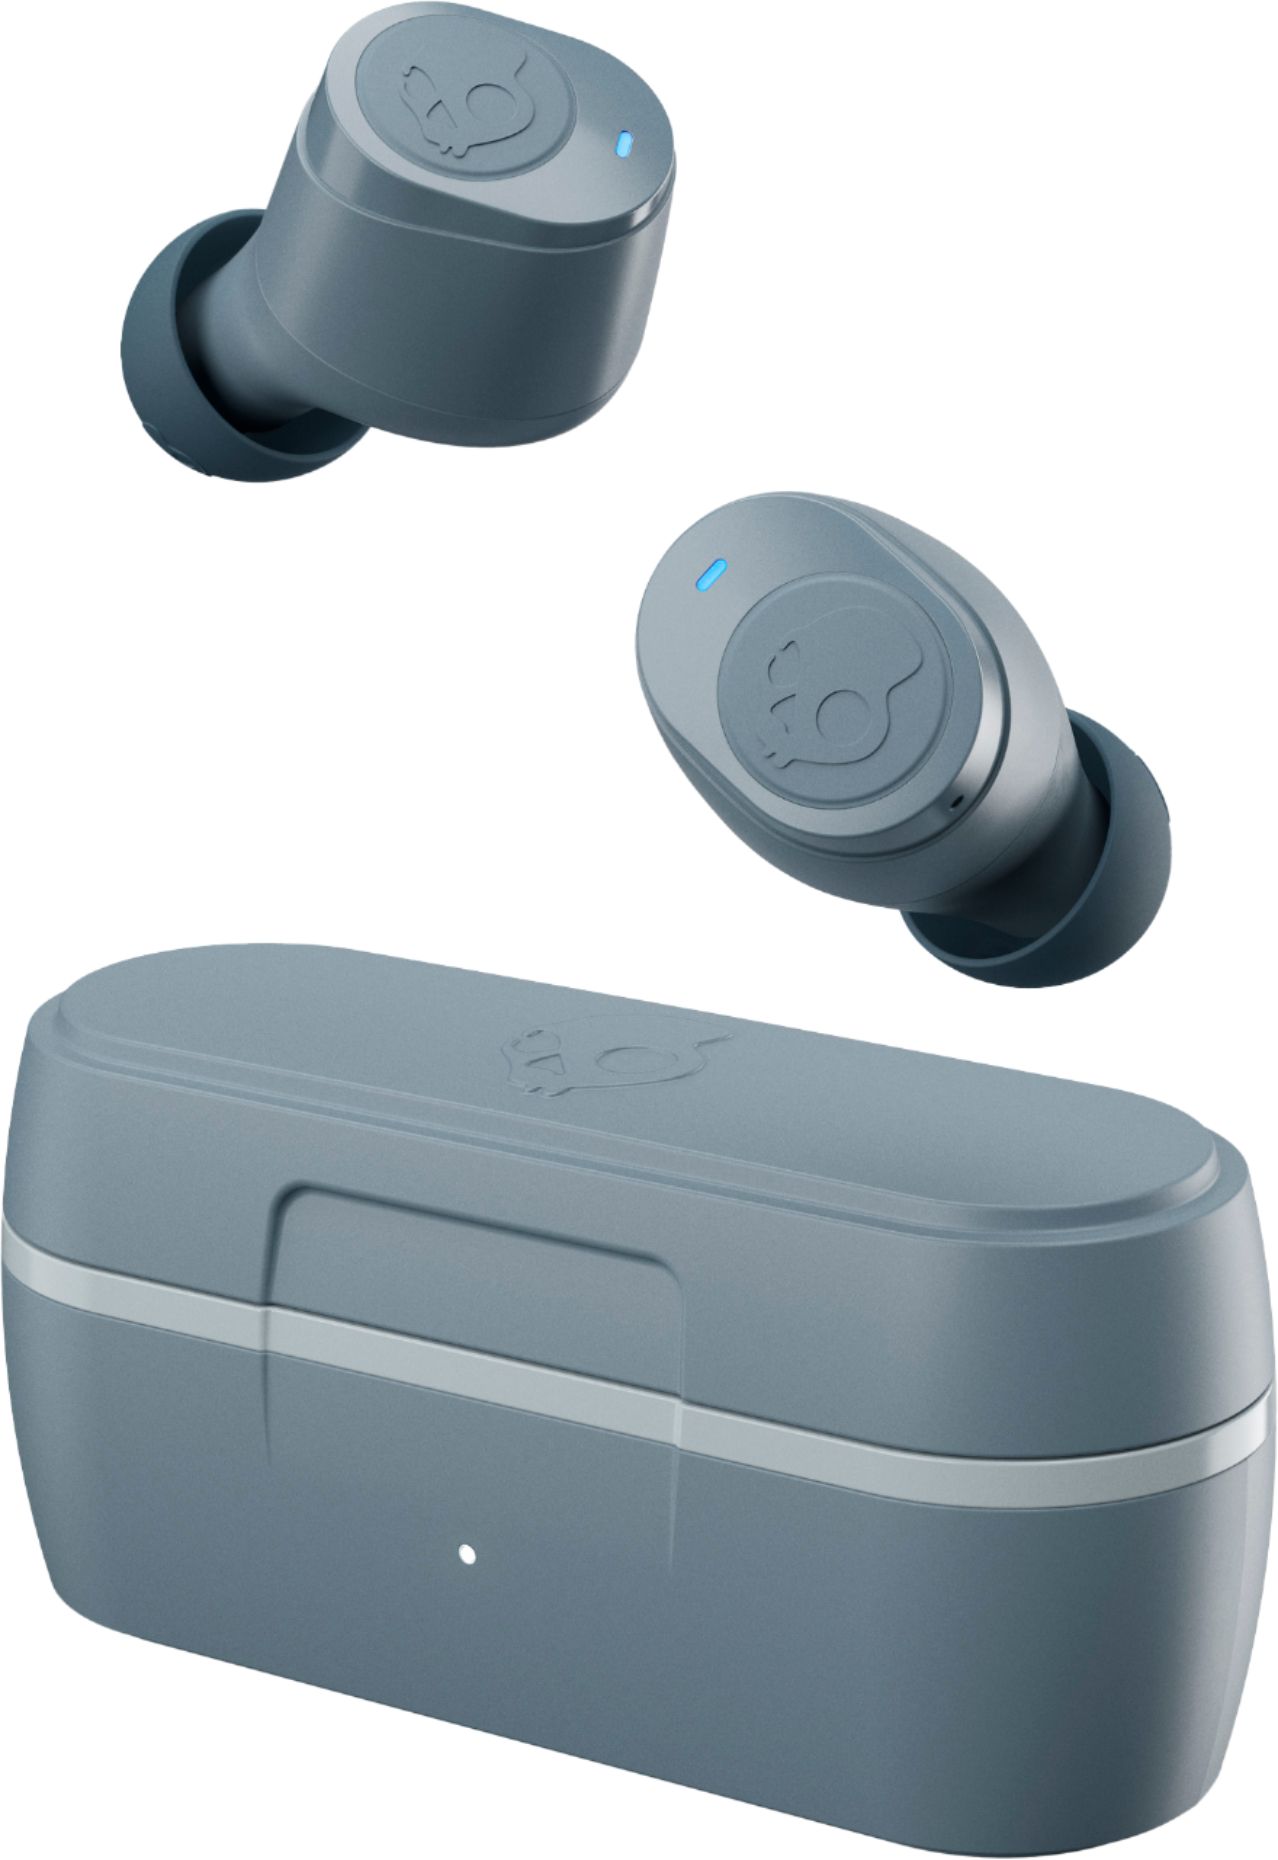 Angle View: Raycon - The Work True Wireless in-ear Headphones. - Black